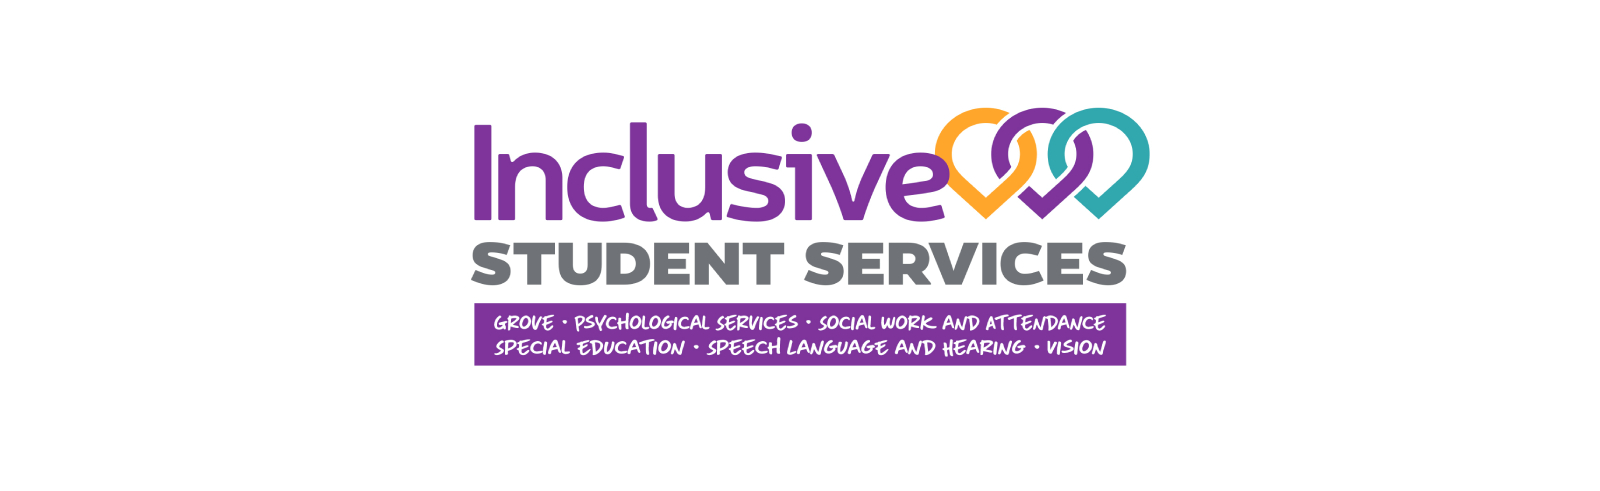 Inclusive Student Services